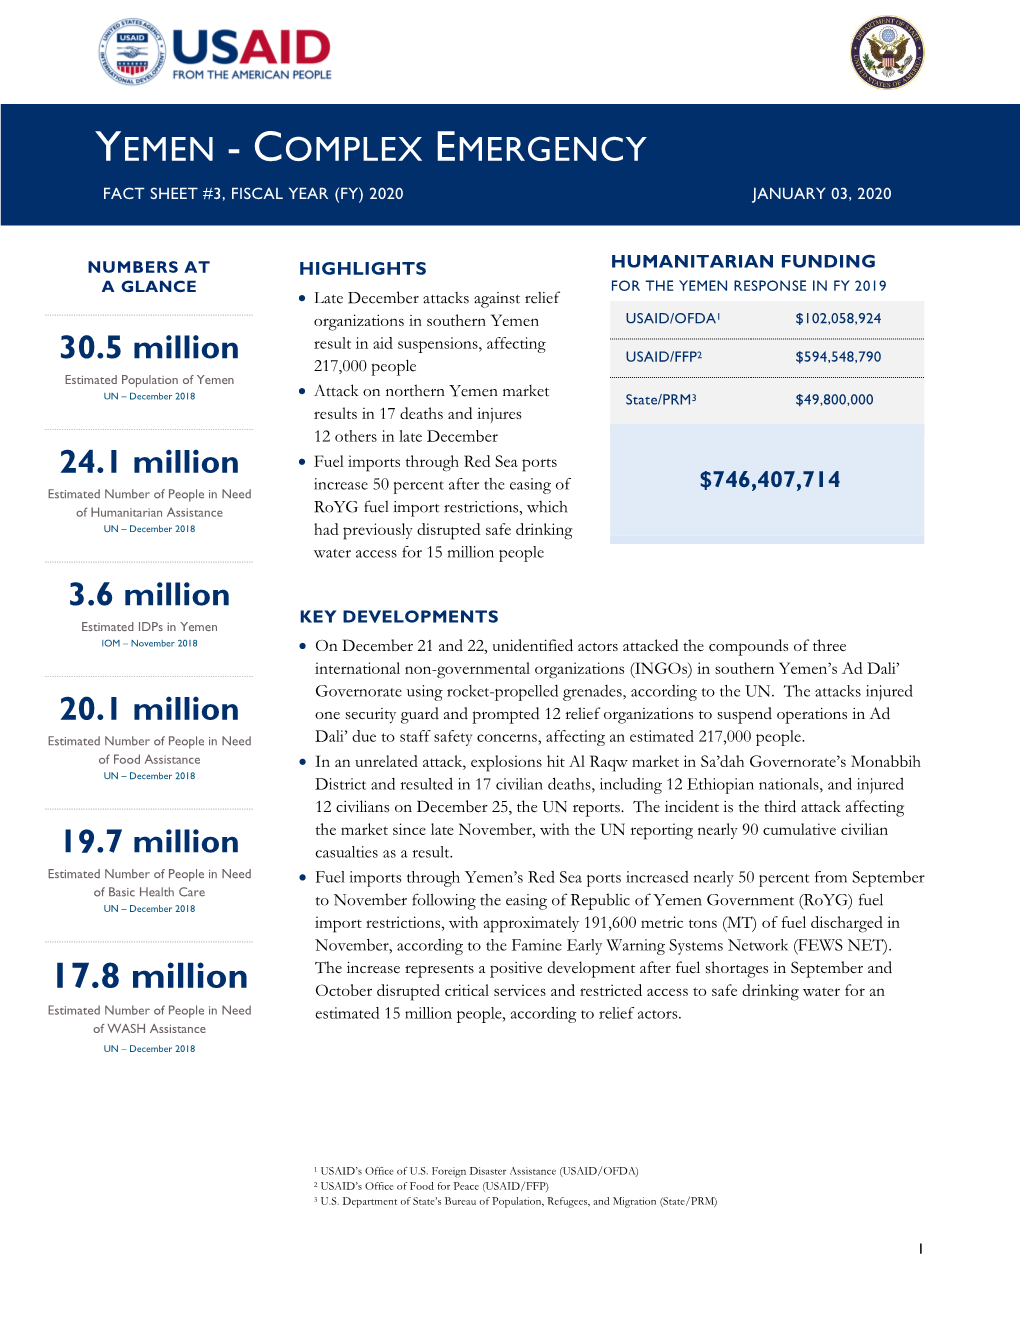 Yemen Complex Emergency Fact Sheet #3